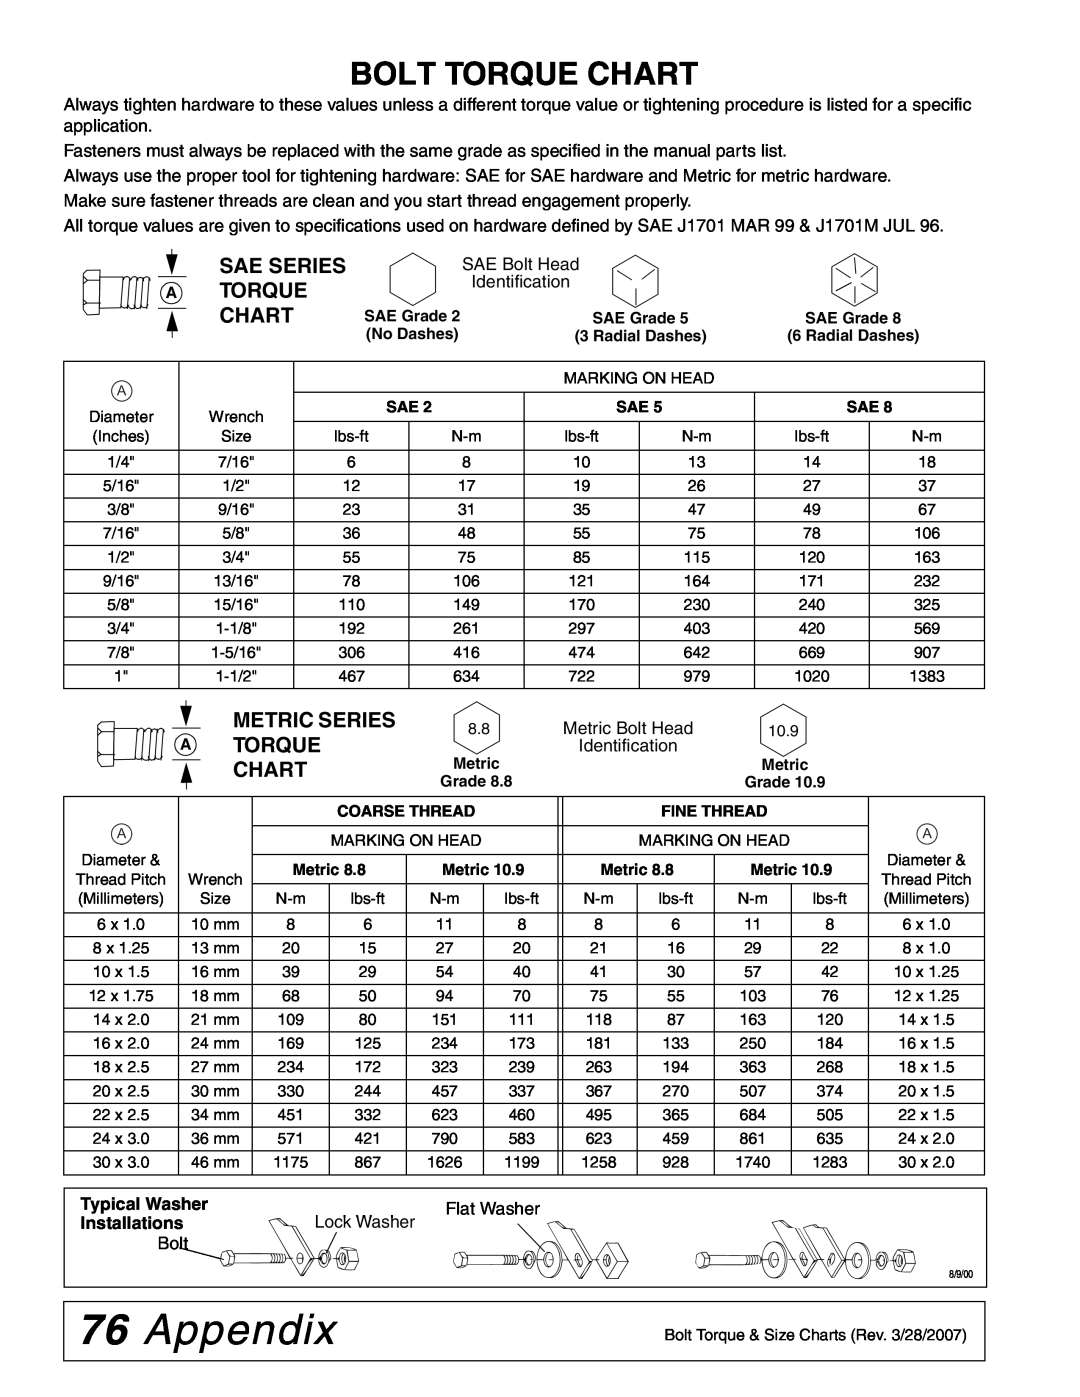 Woods Equipment BW180XQ, BW126XQ manual Appendix, Bolt Torque Chart, Sae Series A Torque Chart, Metric Series 